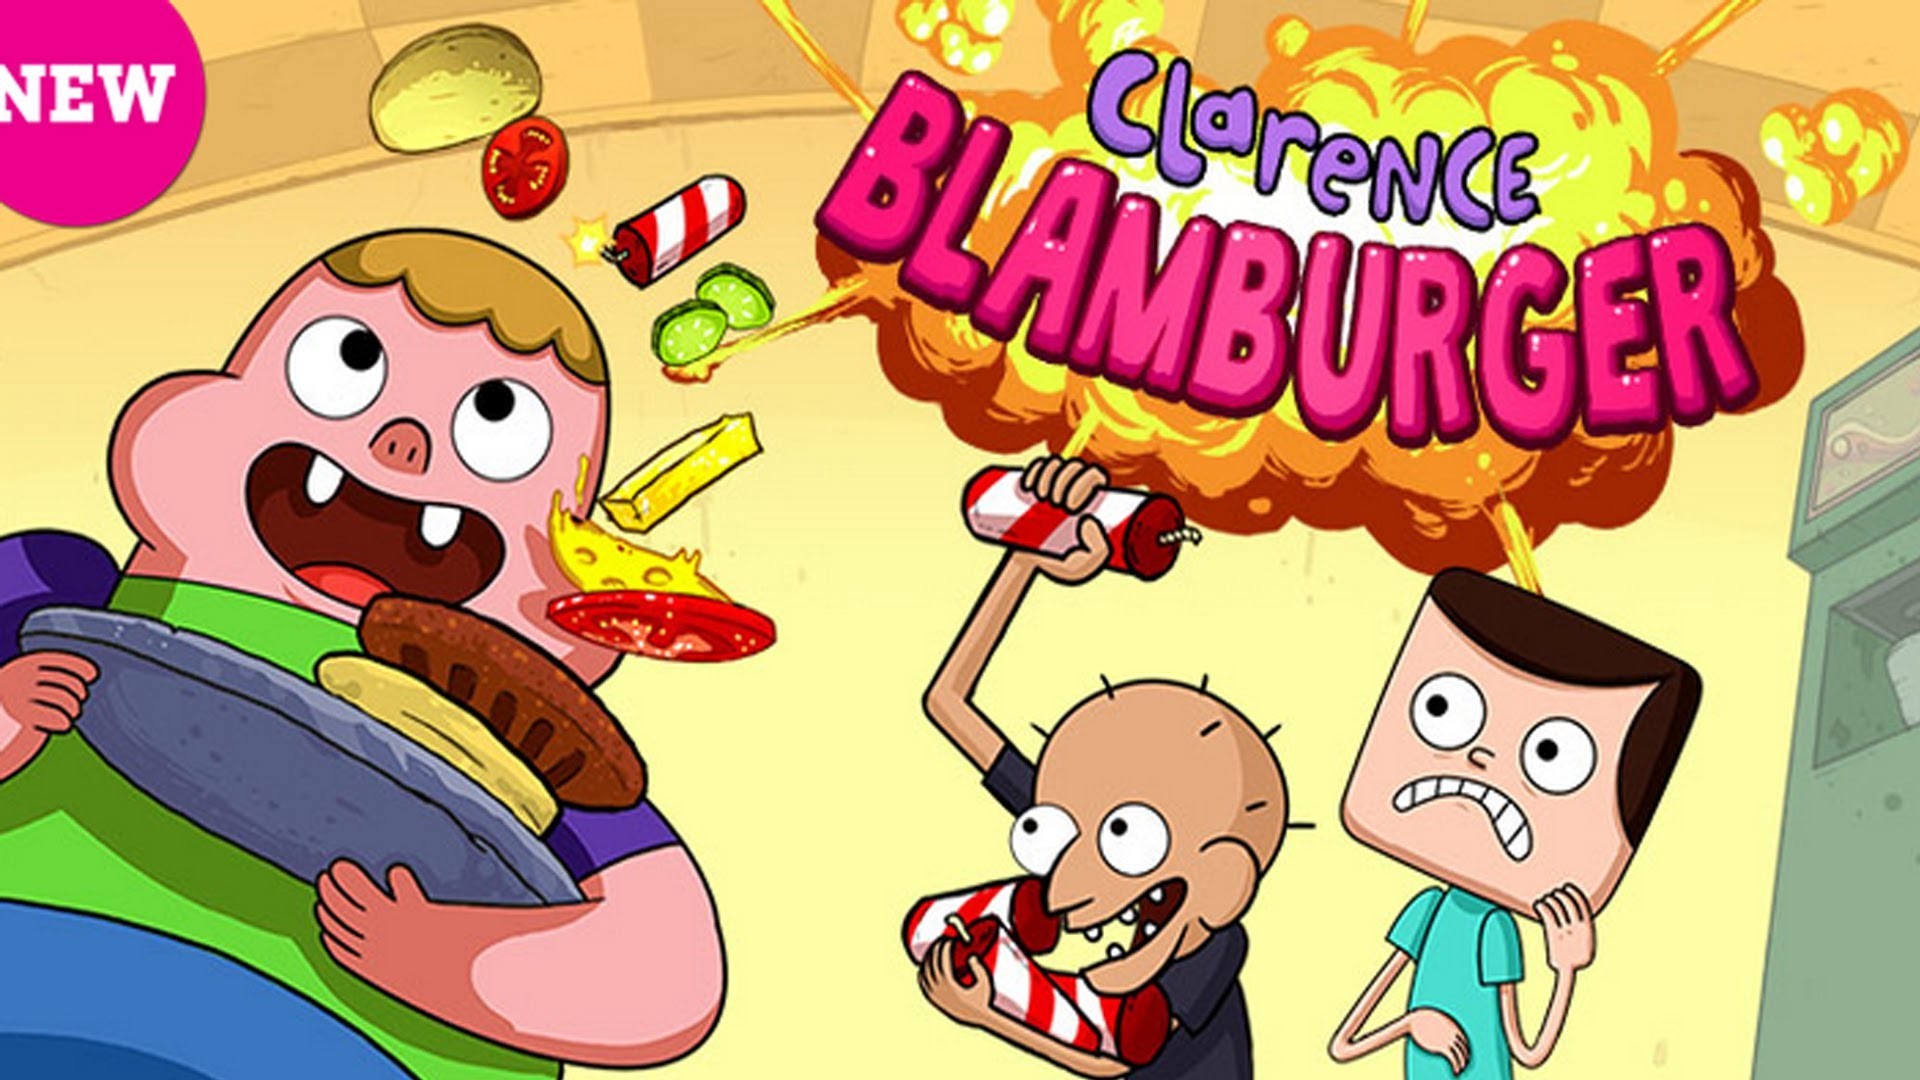 1920x1080 Blamburger Clarence Android GamePlay! (HD) 2015